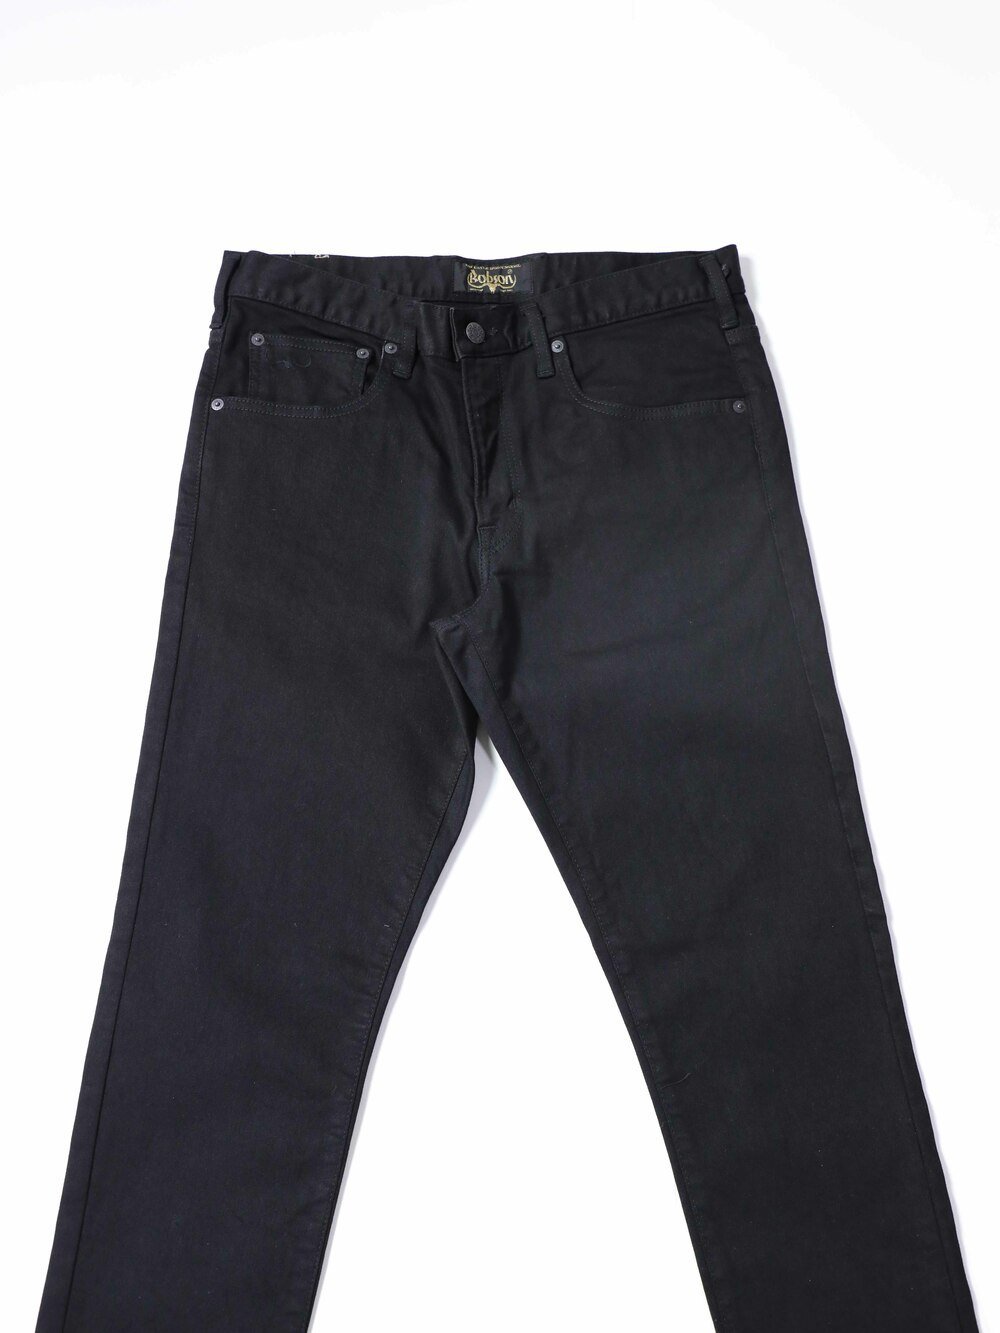 Power Stretch Black Skinny Jeans/Men's – BOBSON JEANS